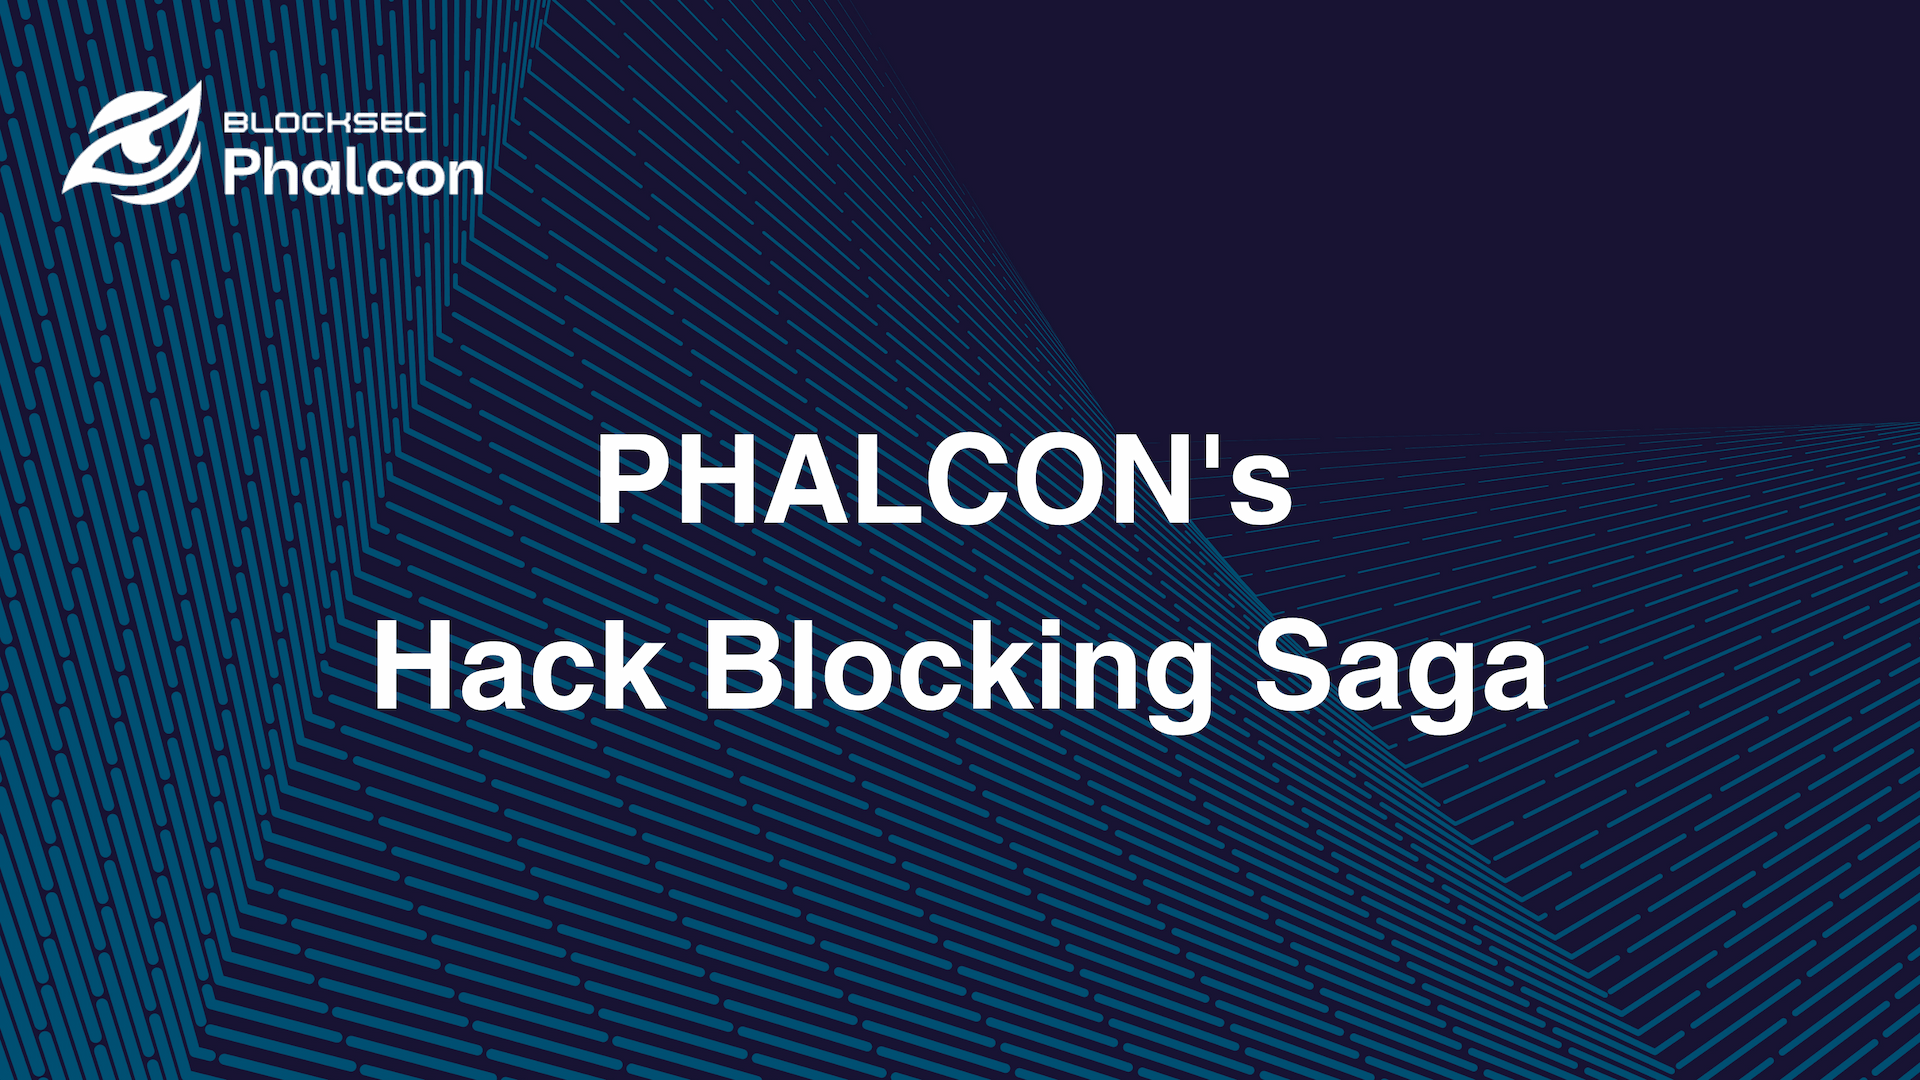 Lead in: Phalcon's Hack Blocking Saga